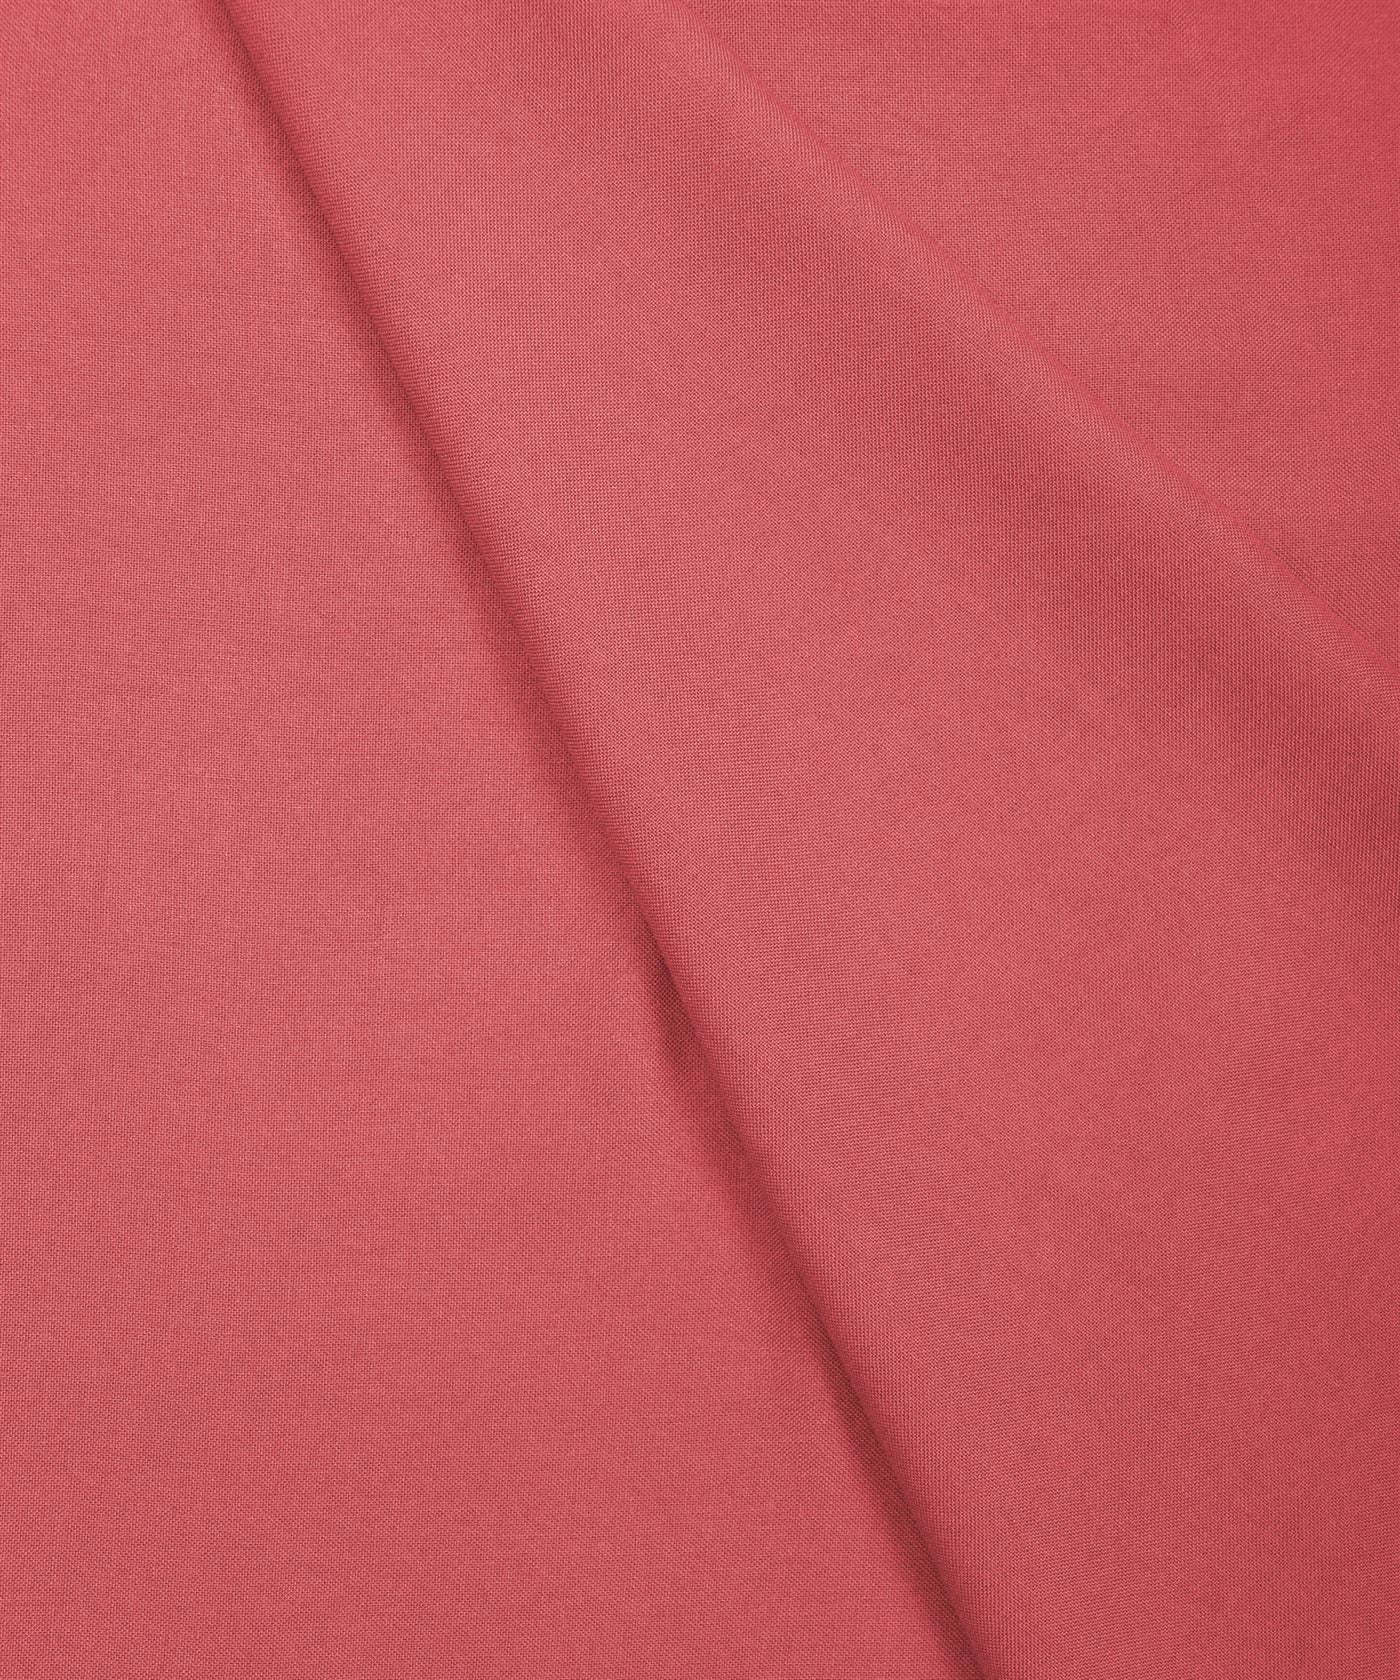 Dark Peach Plain Dyed Rayon Fabric